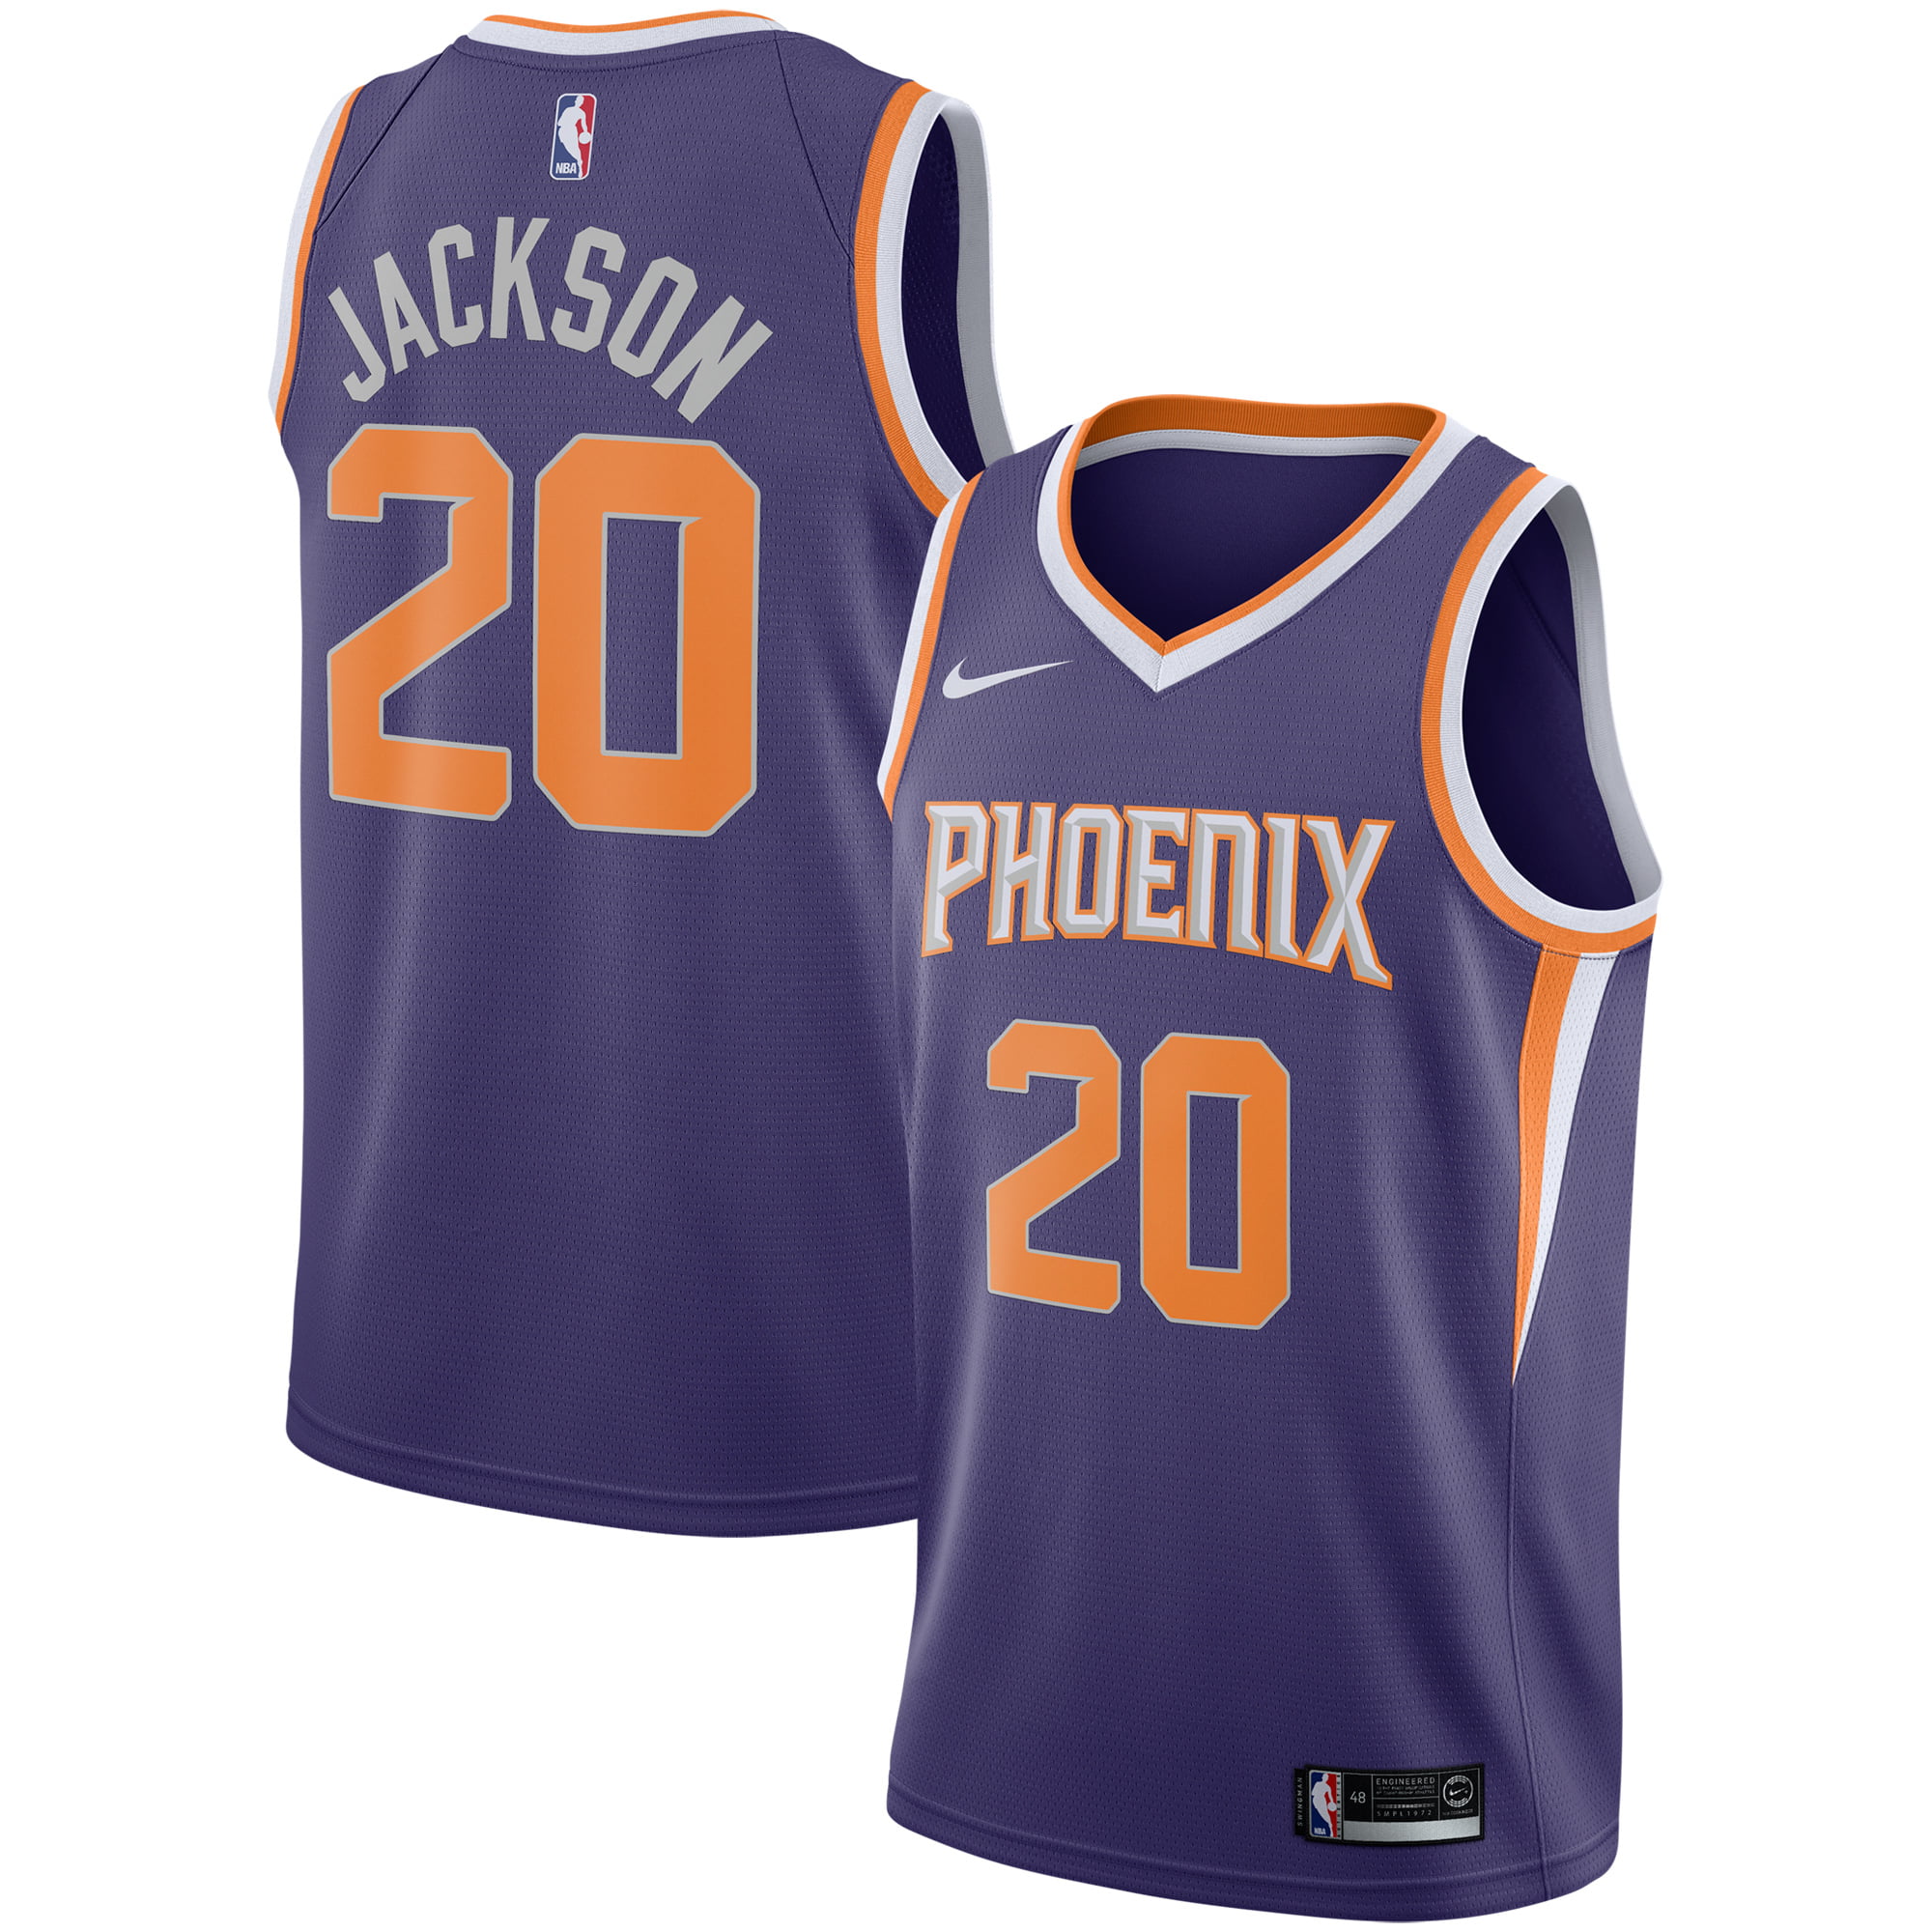 Josh Jackson Phoenix Suns Nike Replica 